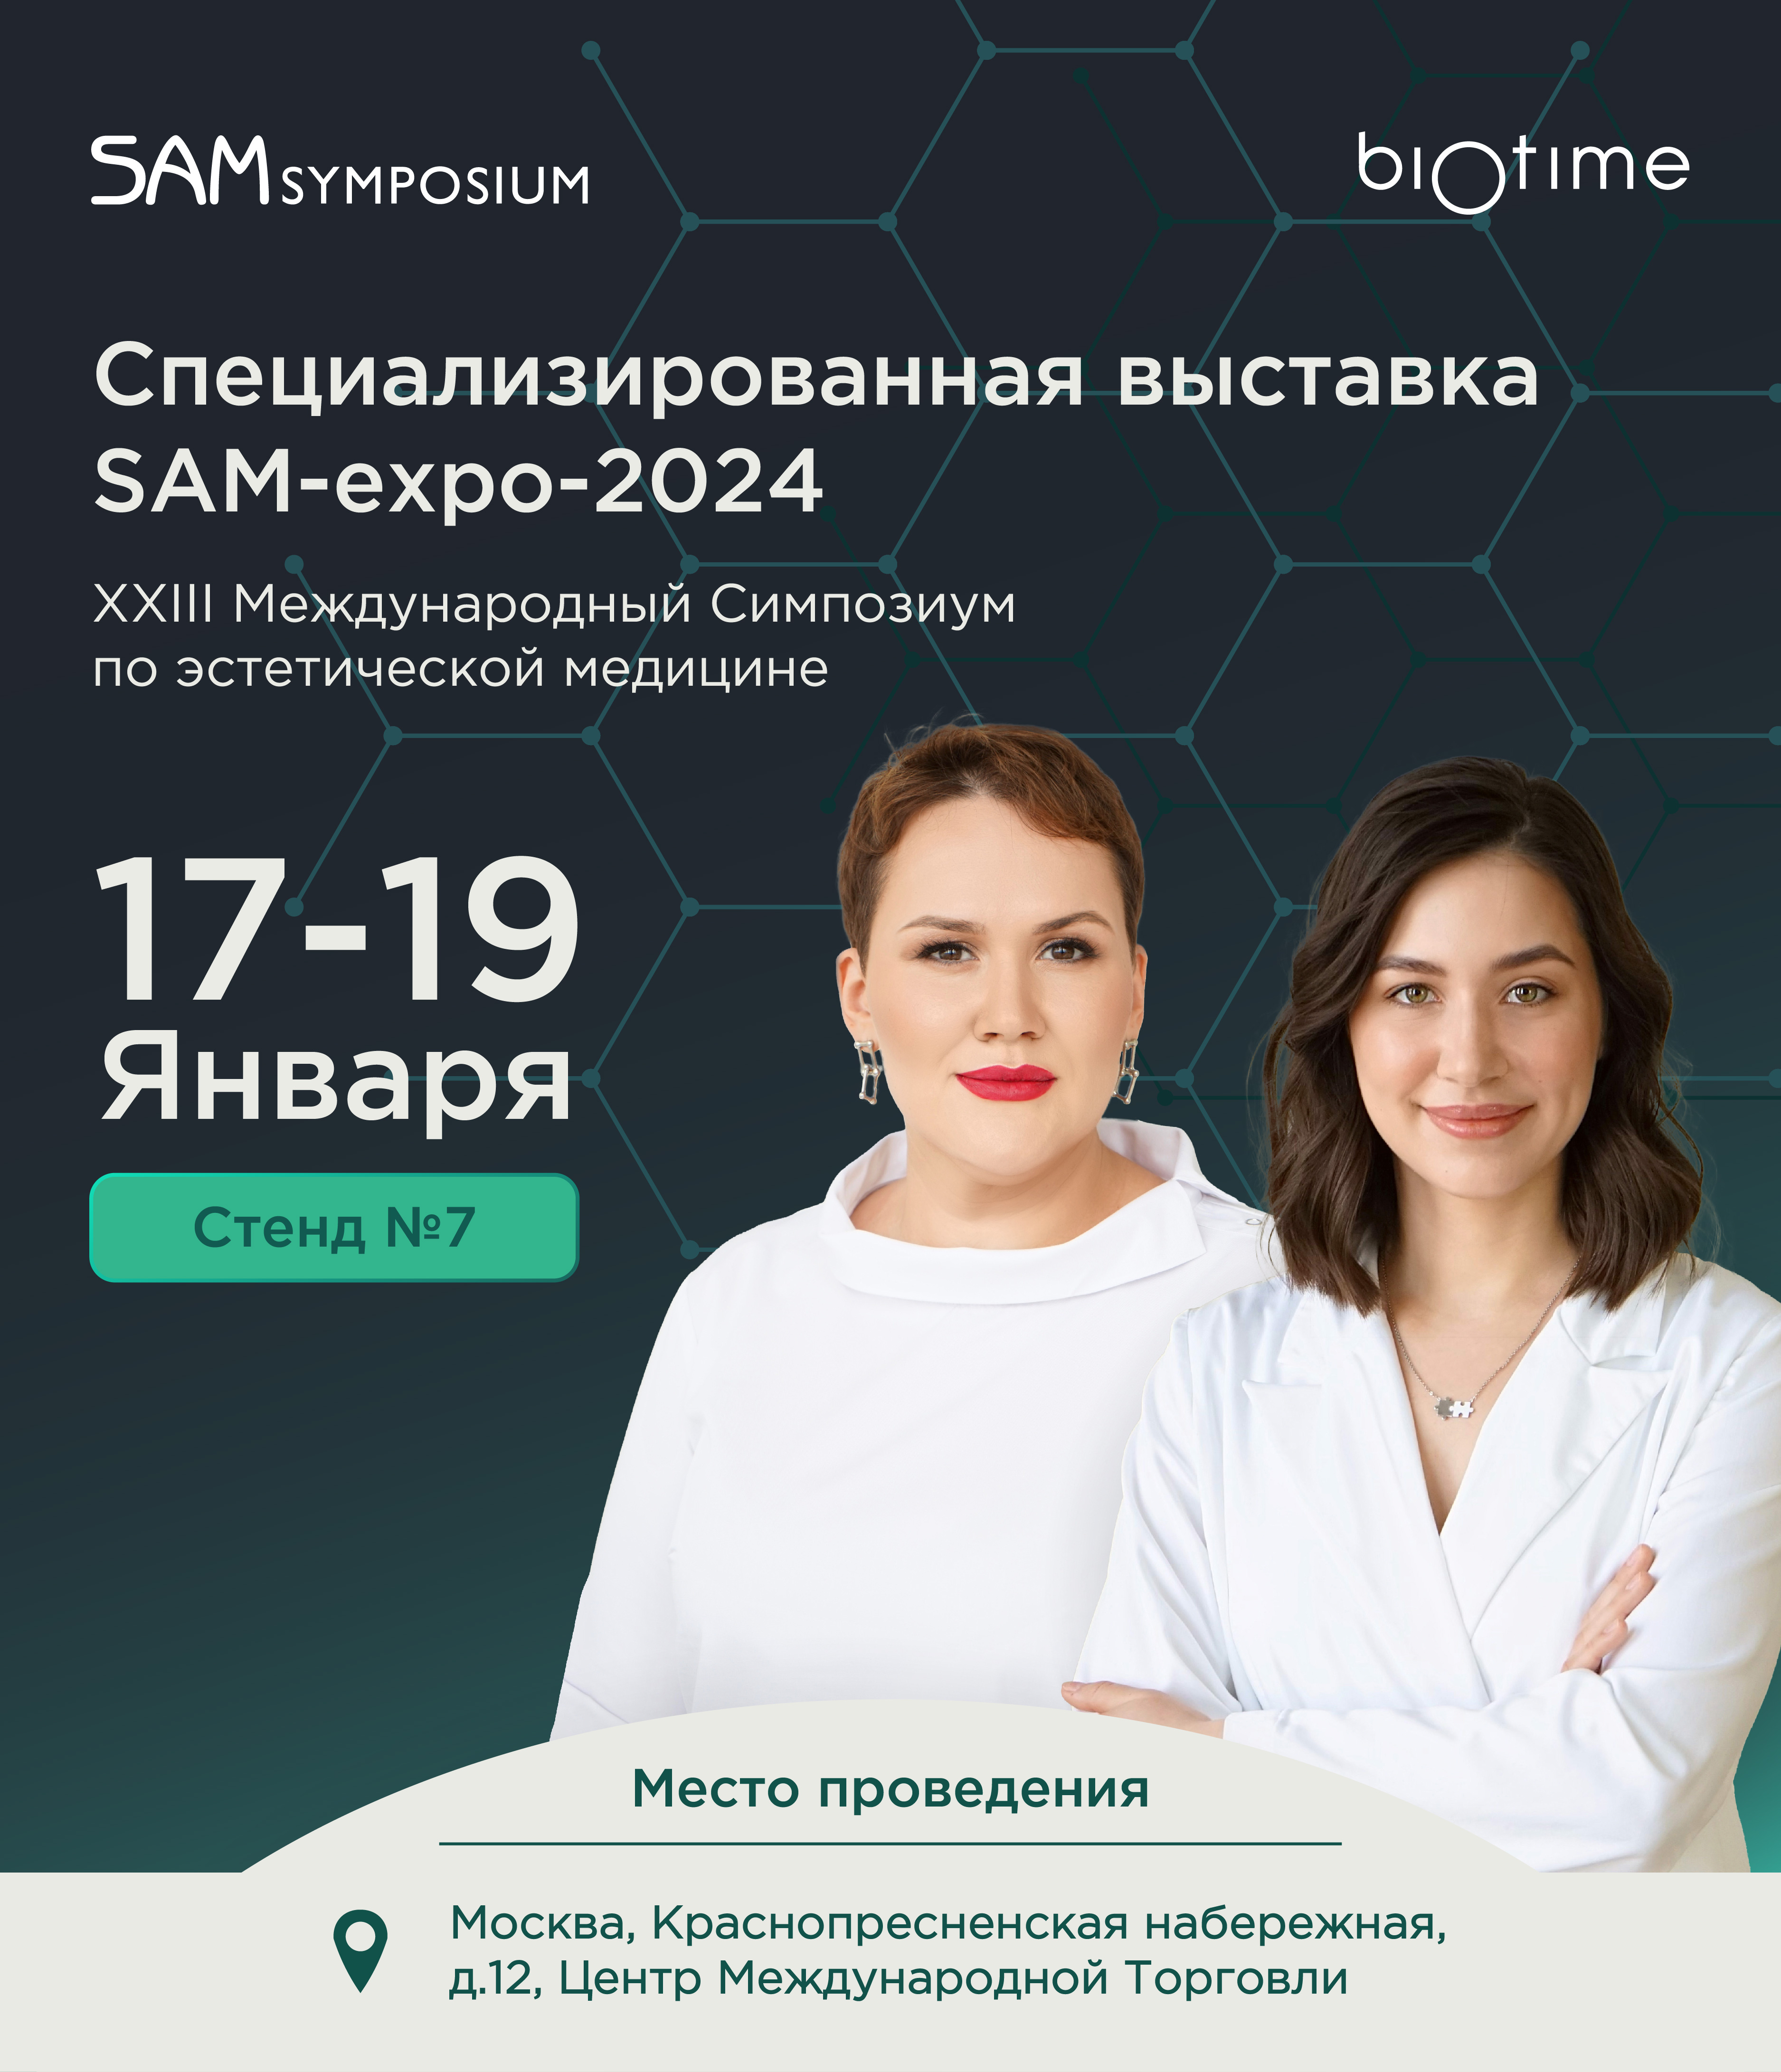 Biotime at SAM-expo-2024